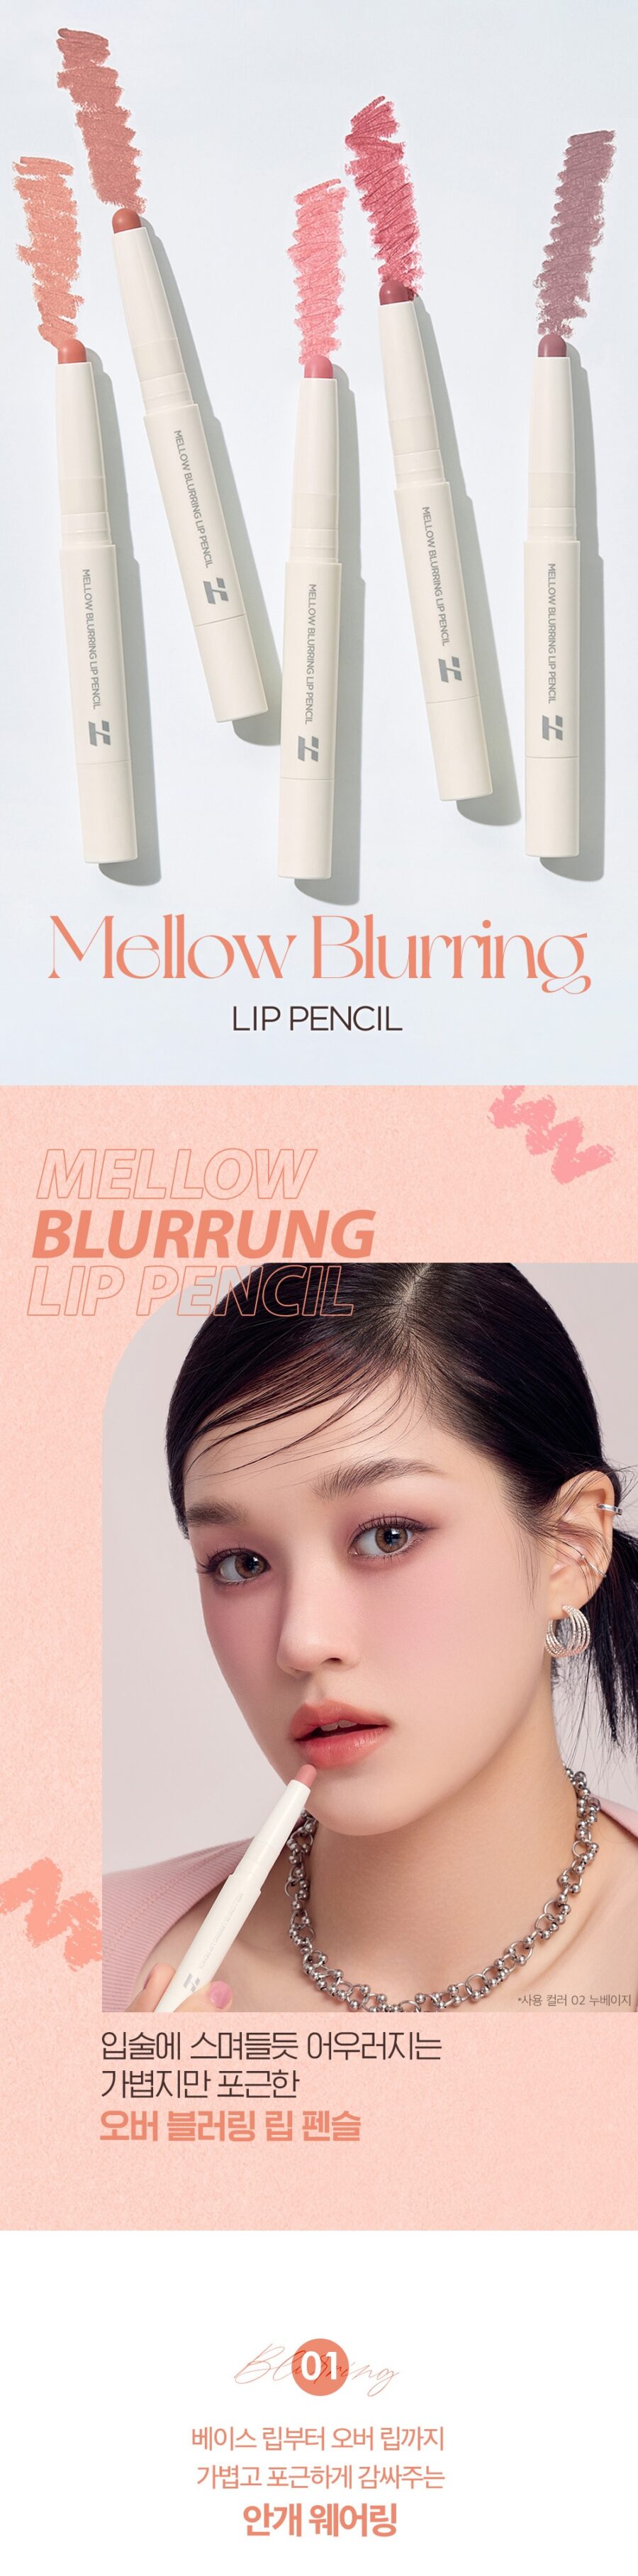 Holika Holika Mellow Blurring Lip Pencil korean skincare product online shop malaysia hong kong china1